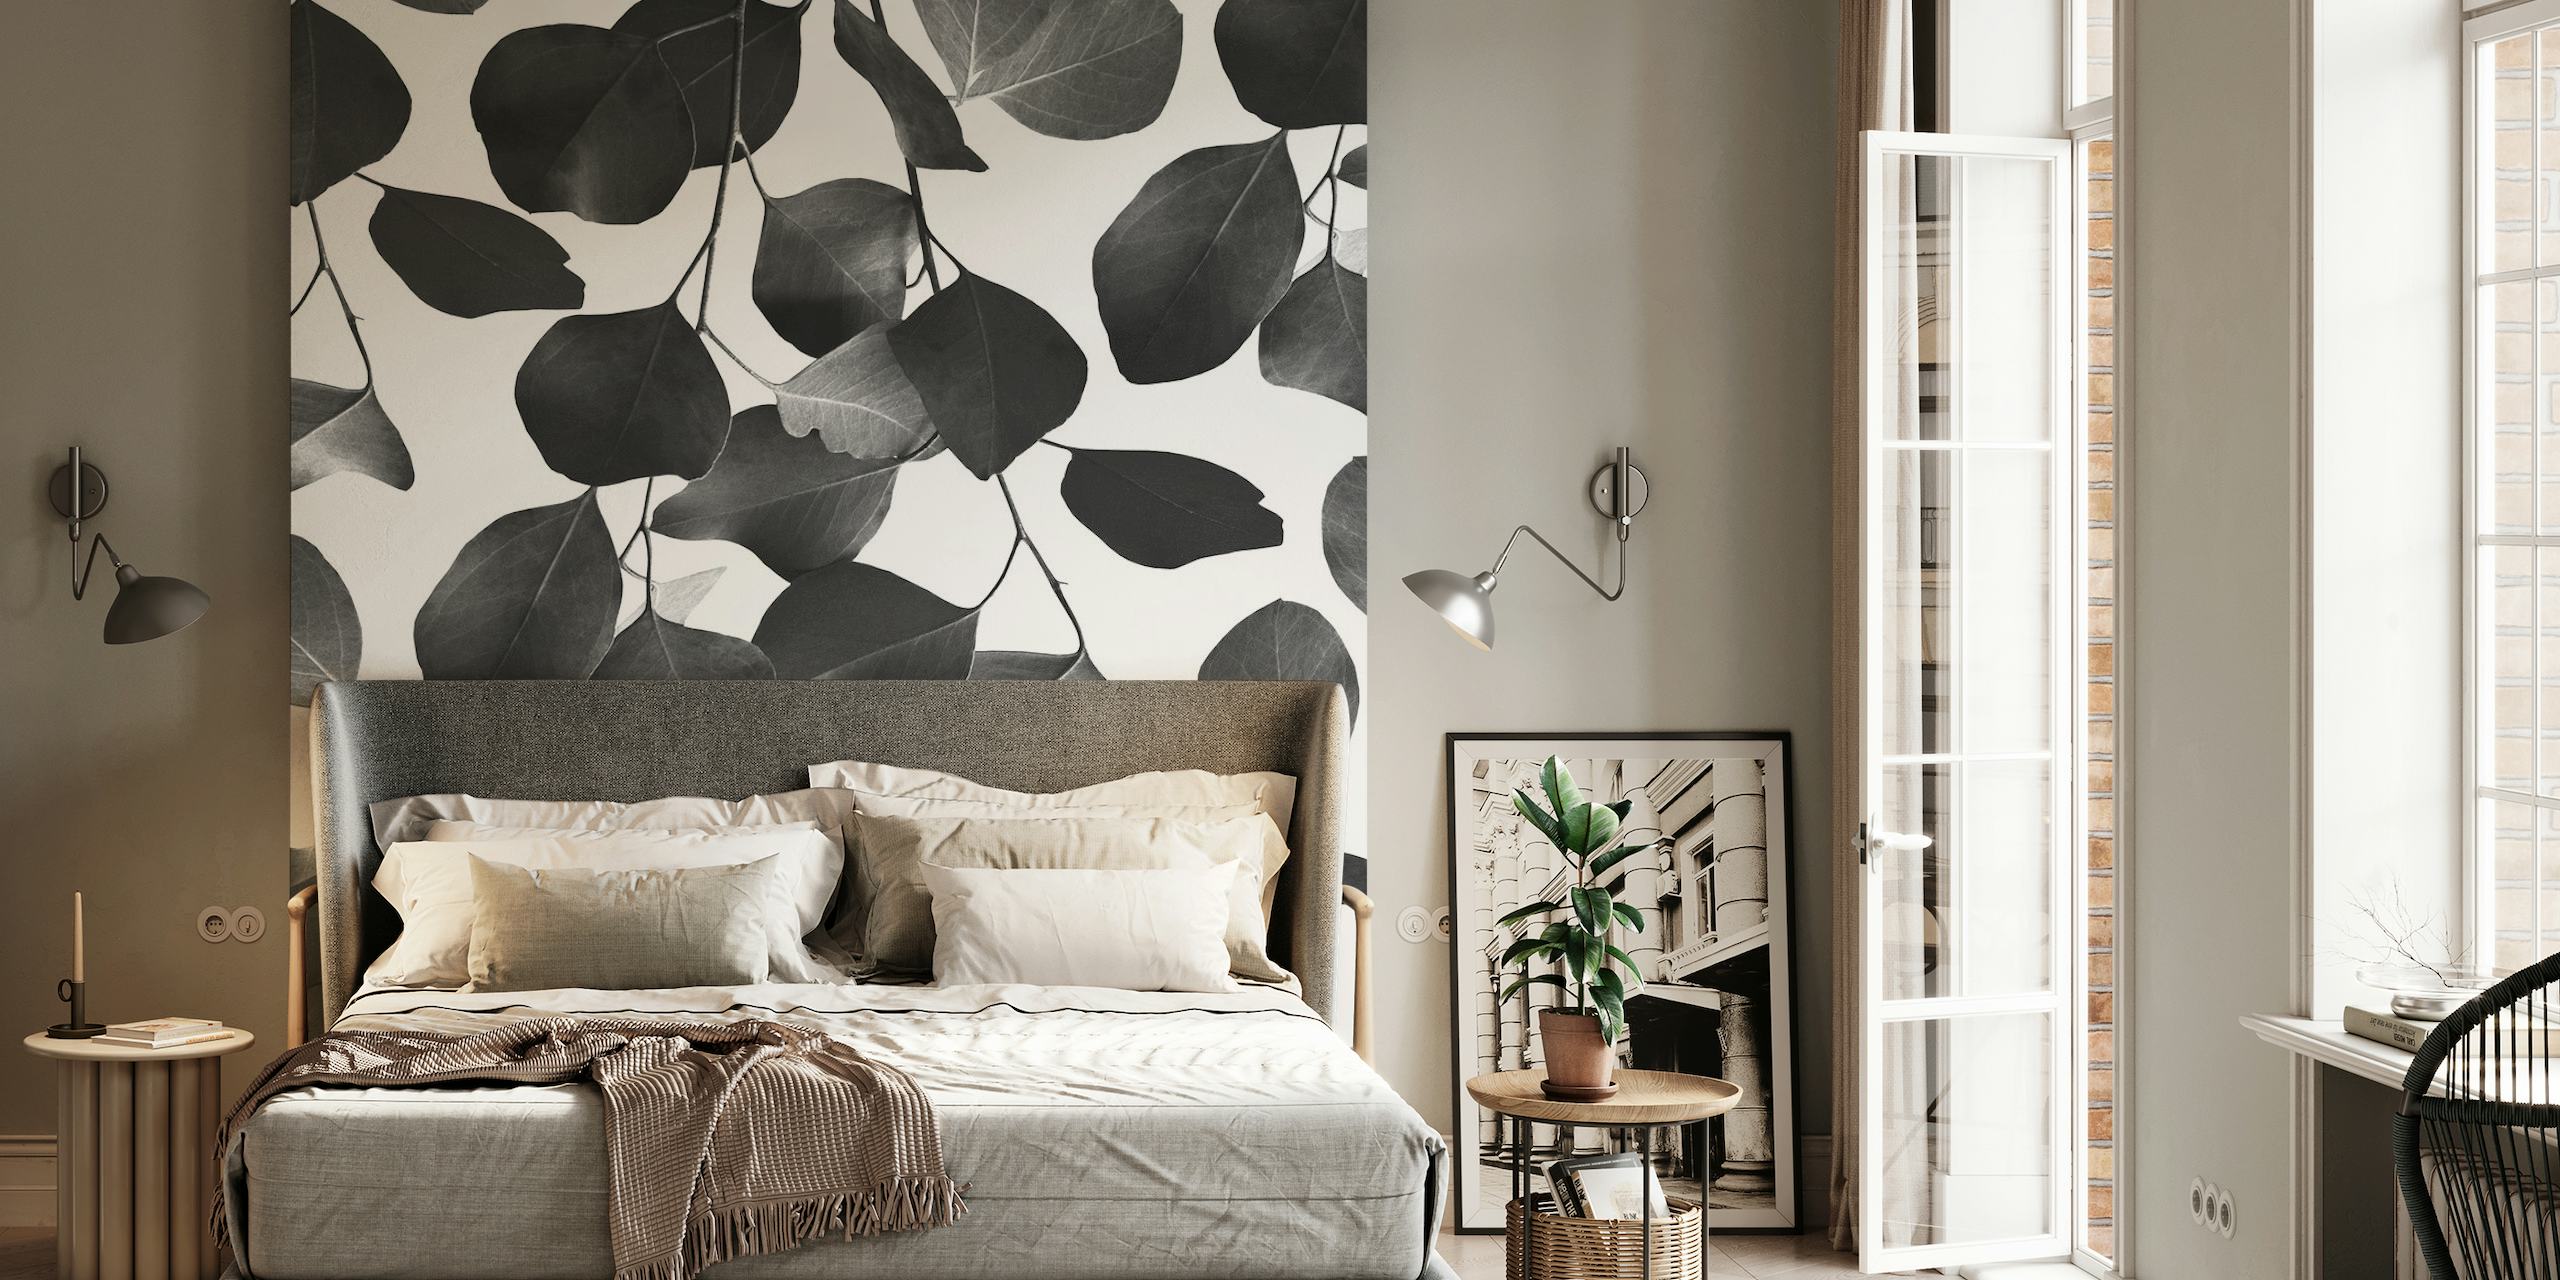 Monochrome eucalyptus leaves wall mural for calm, botanical decor